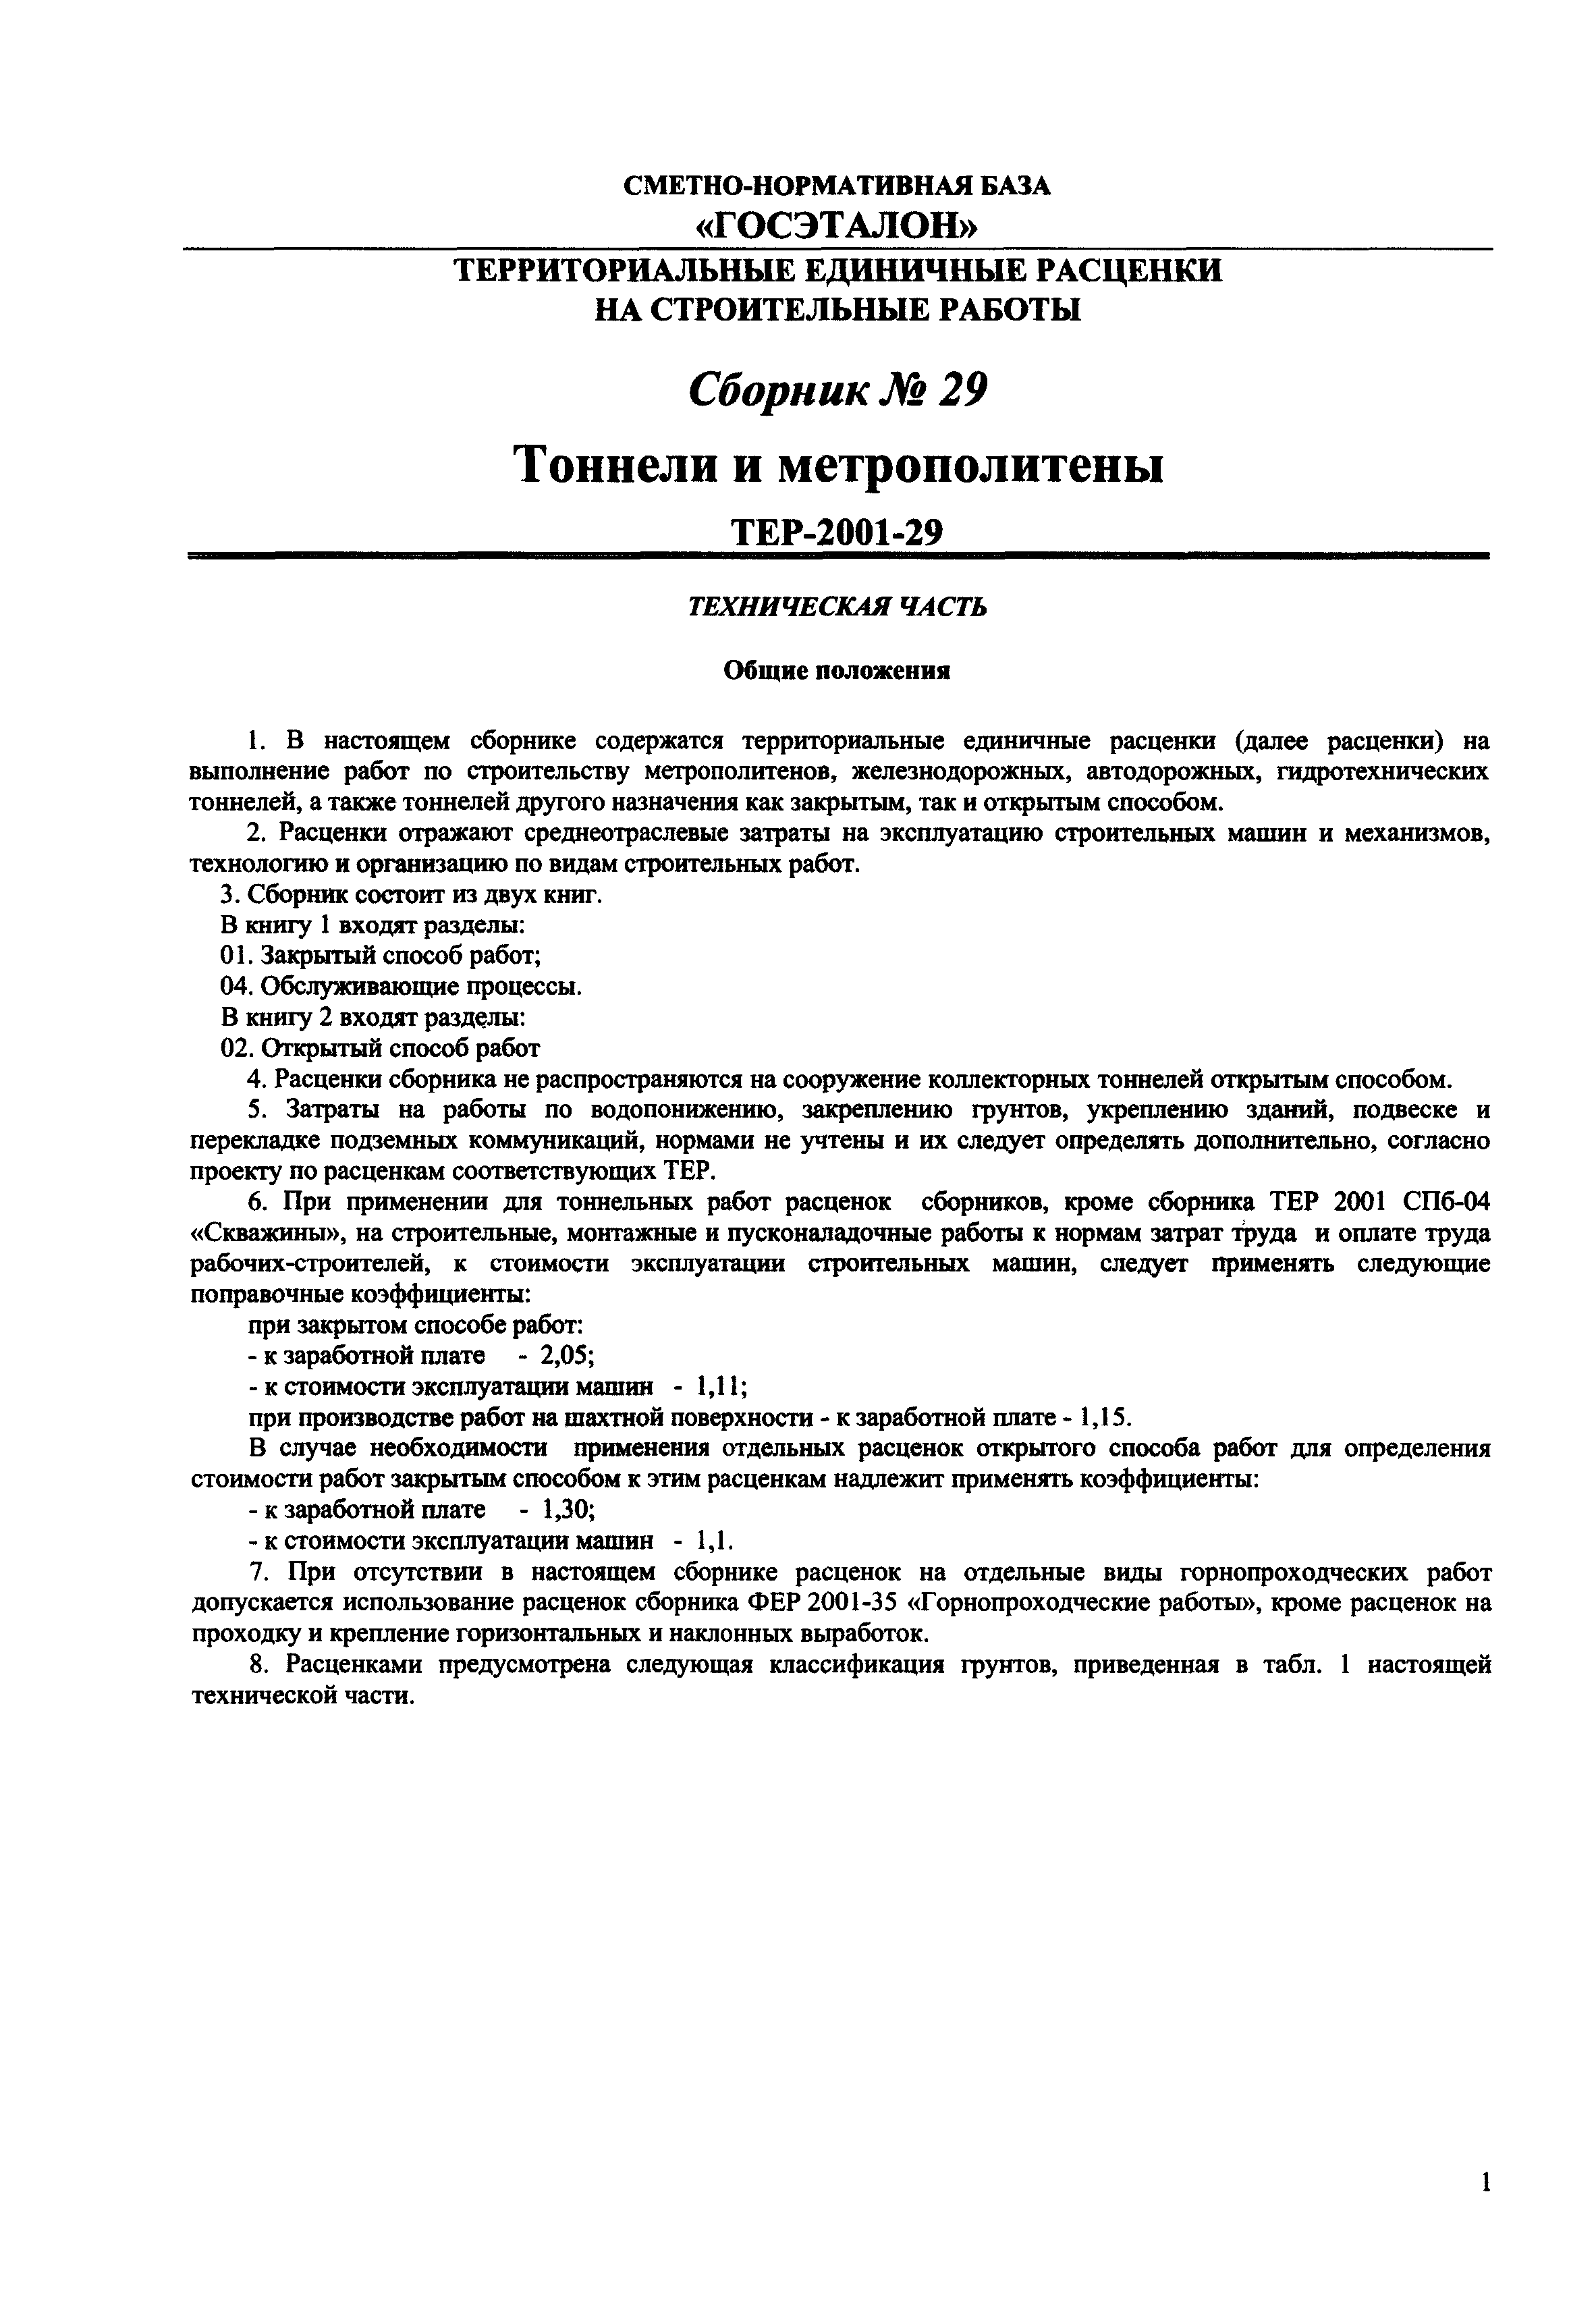 ТЕР 2001-29 СПб